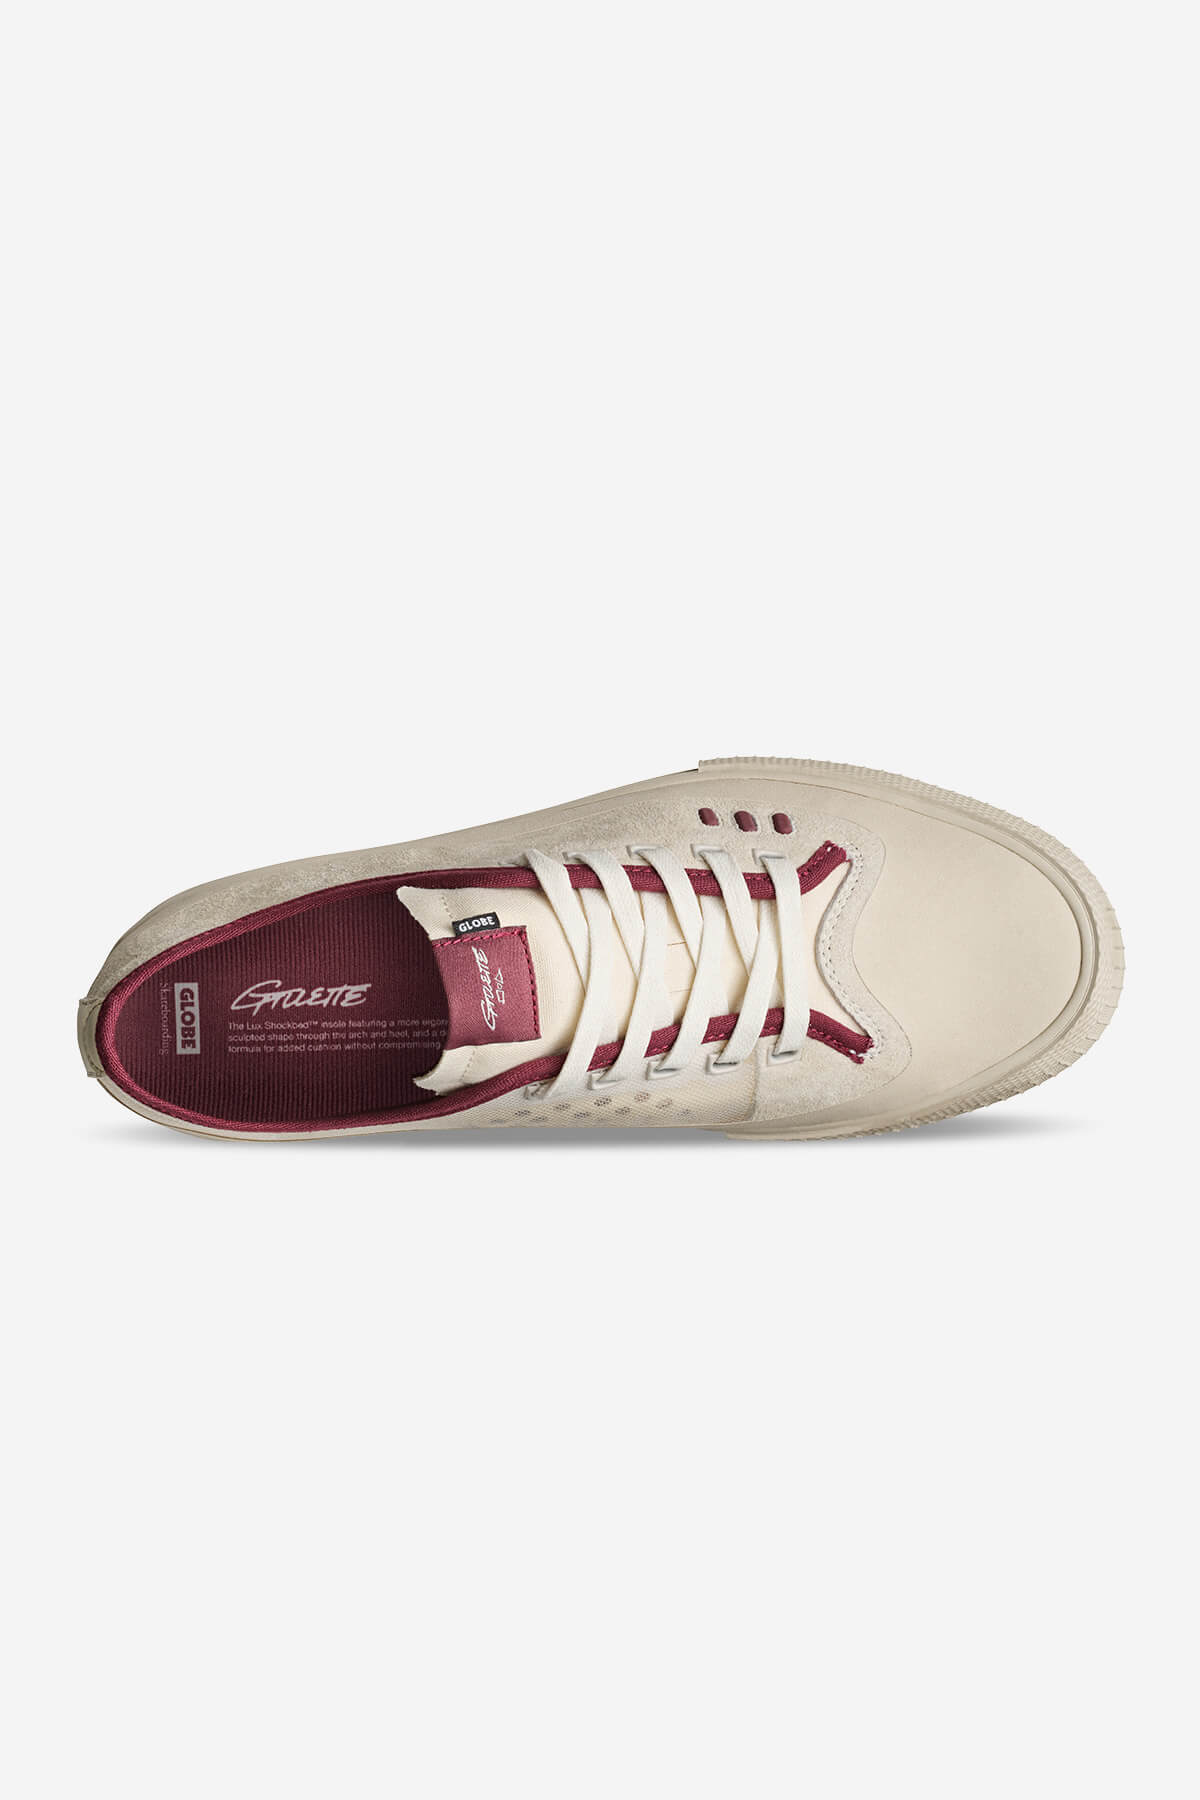 Globe - Gillette - Cream/Pomegranate - skateboard Chaussures